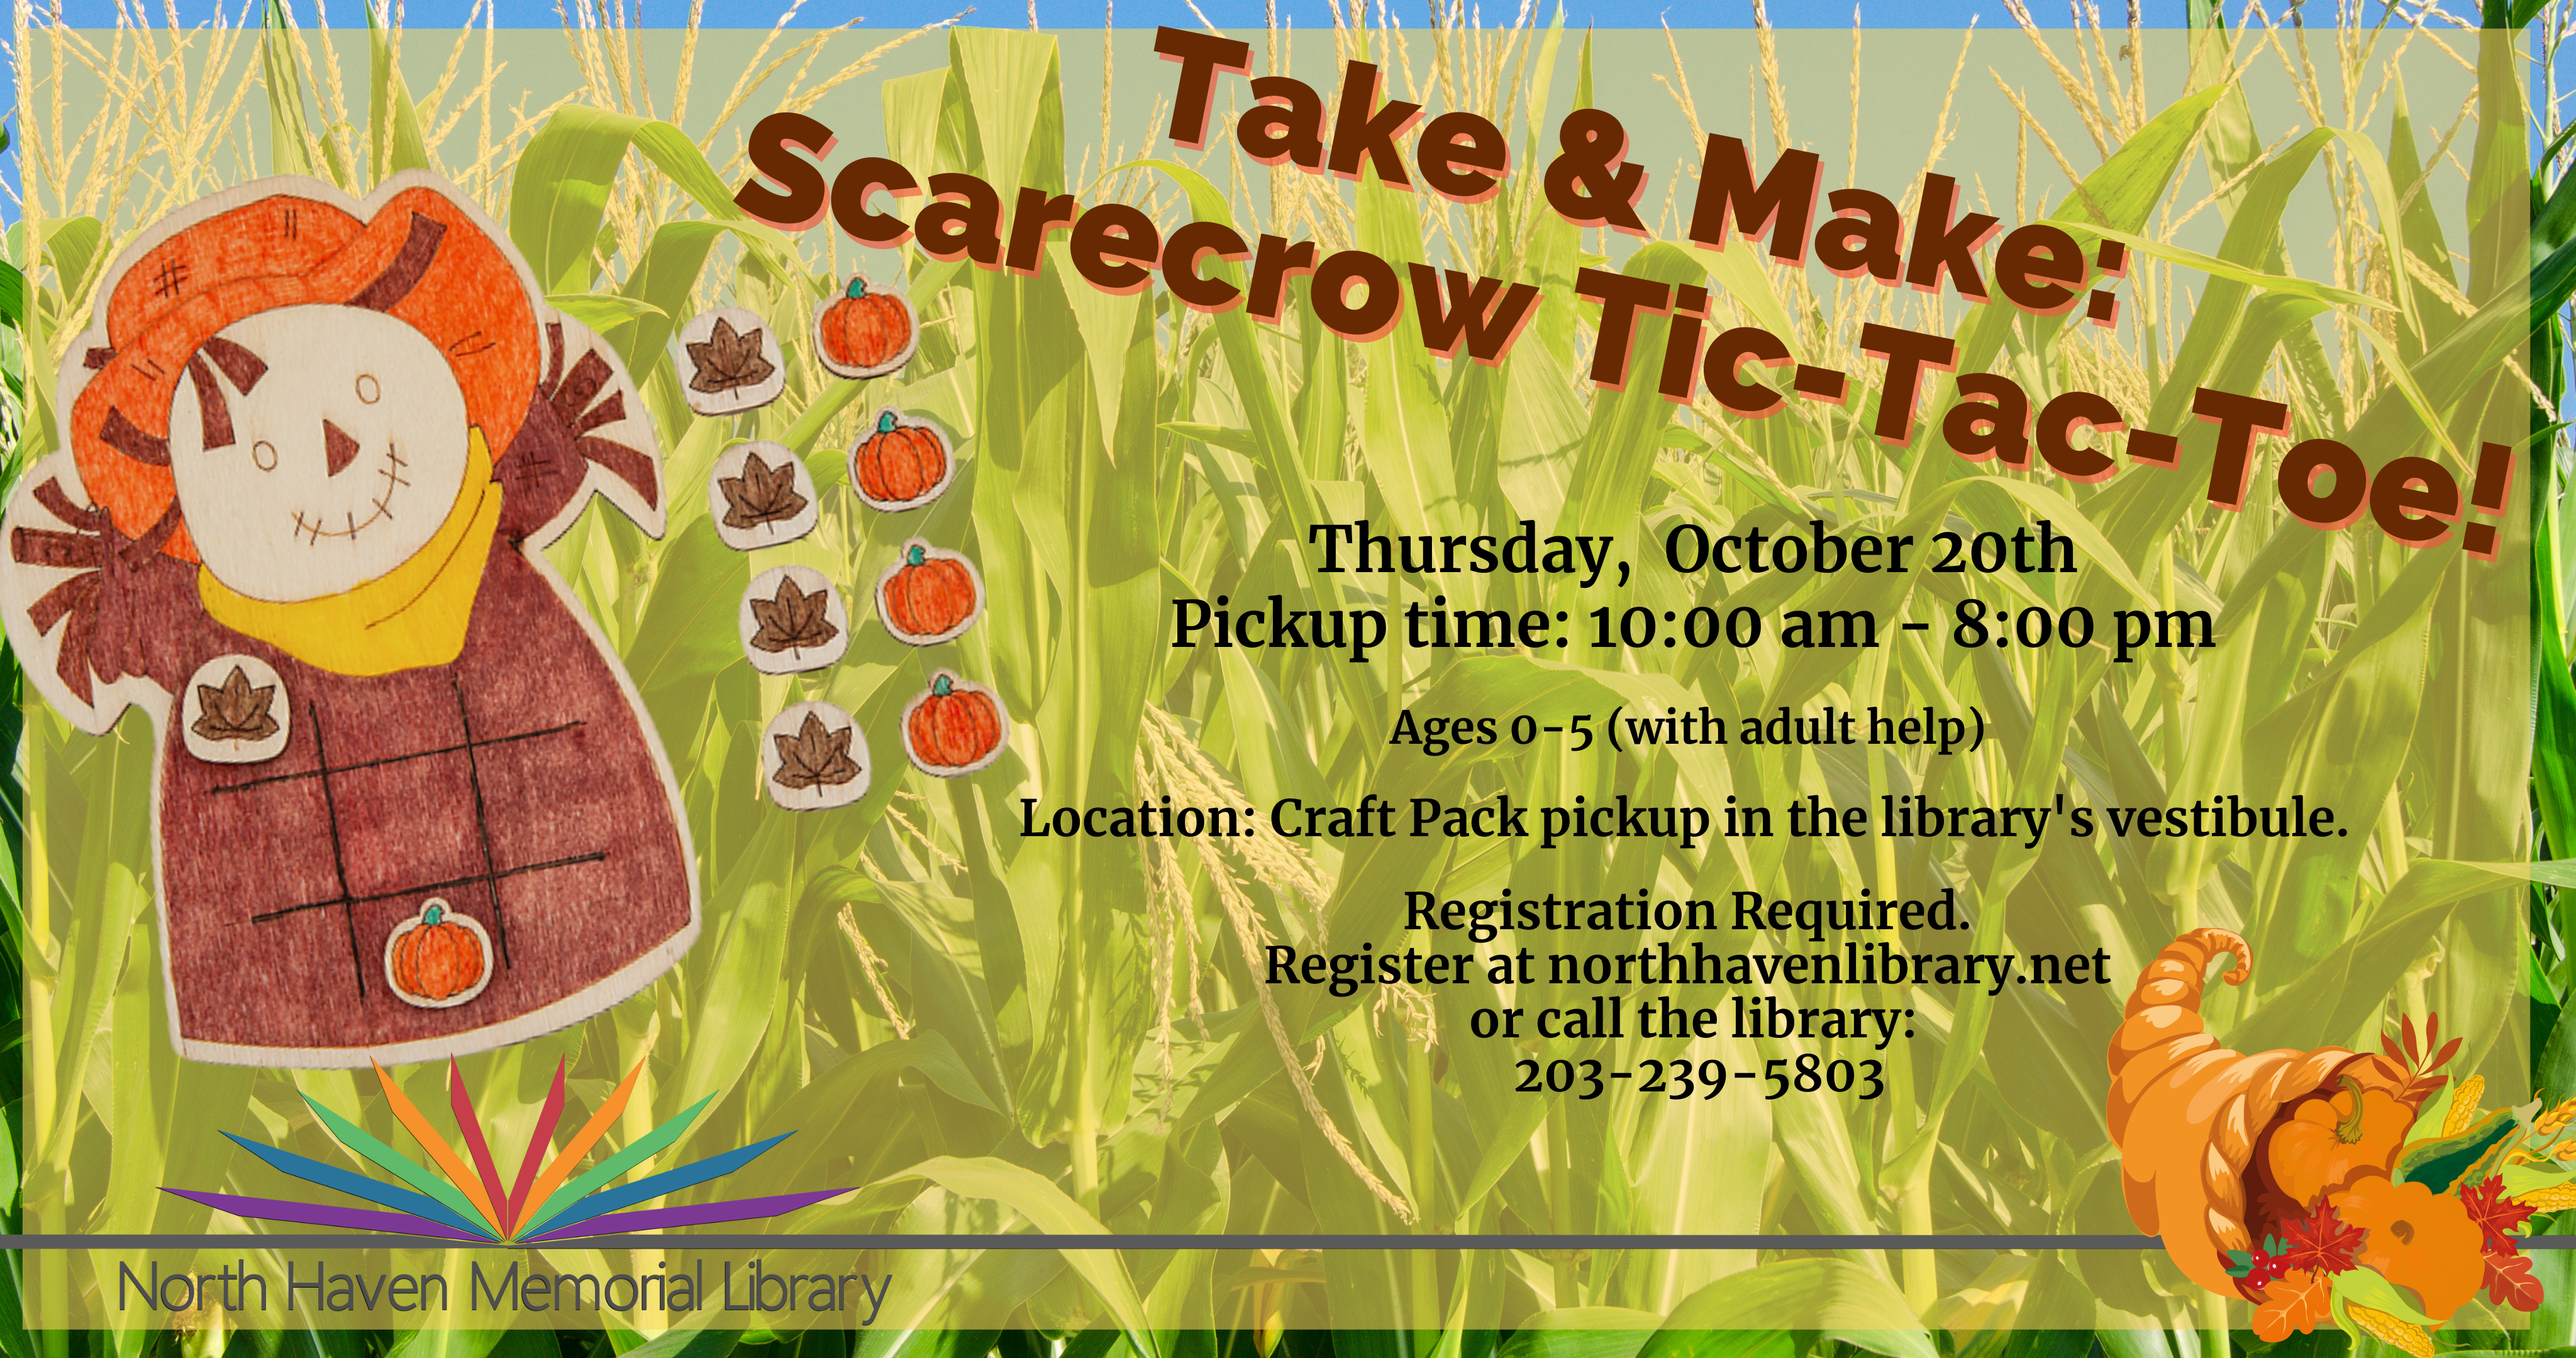 Take & Make Craft Pack: Scarecrow Tic Tac Toe